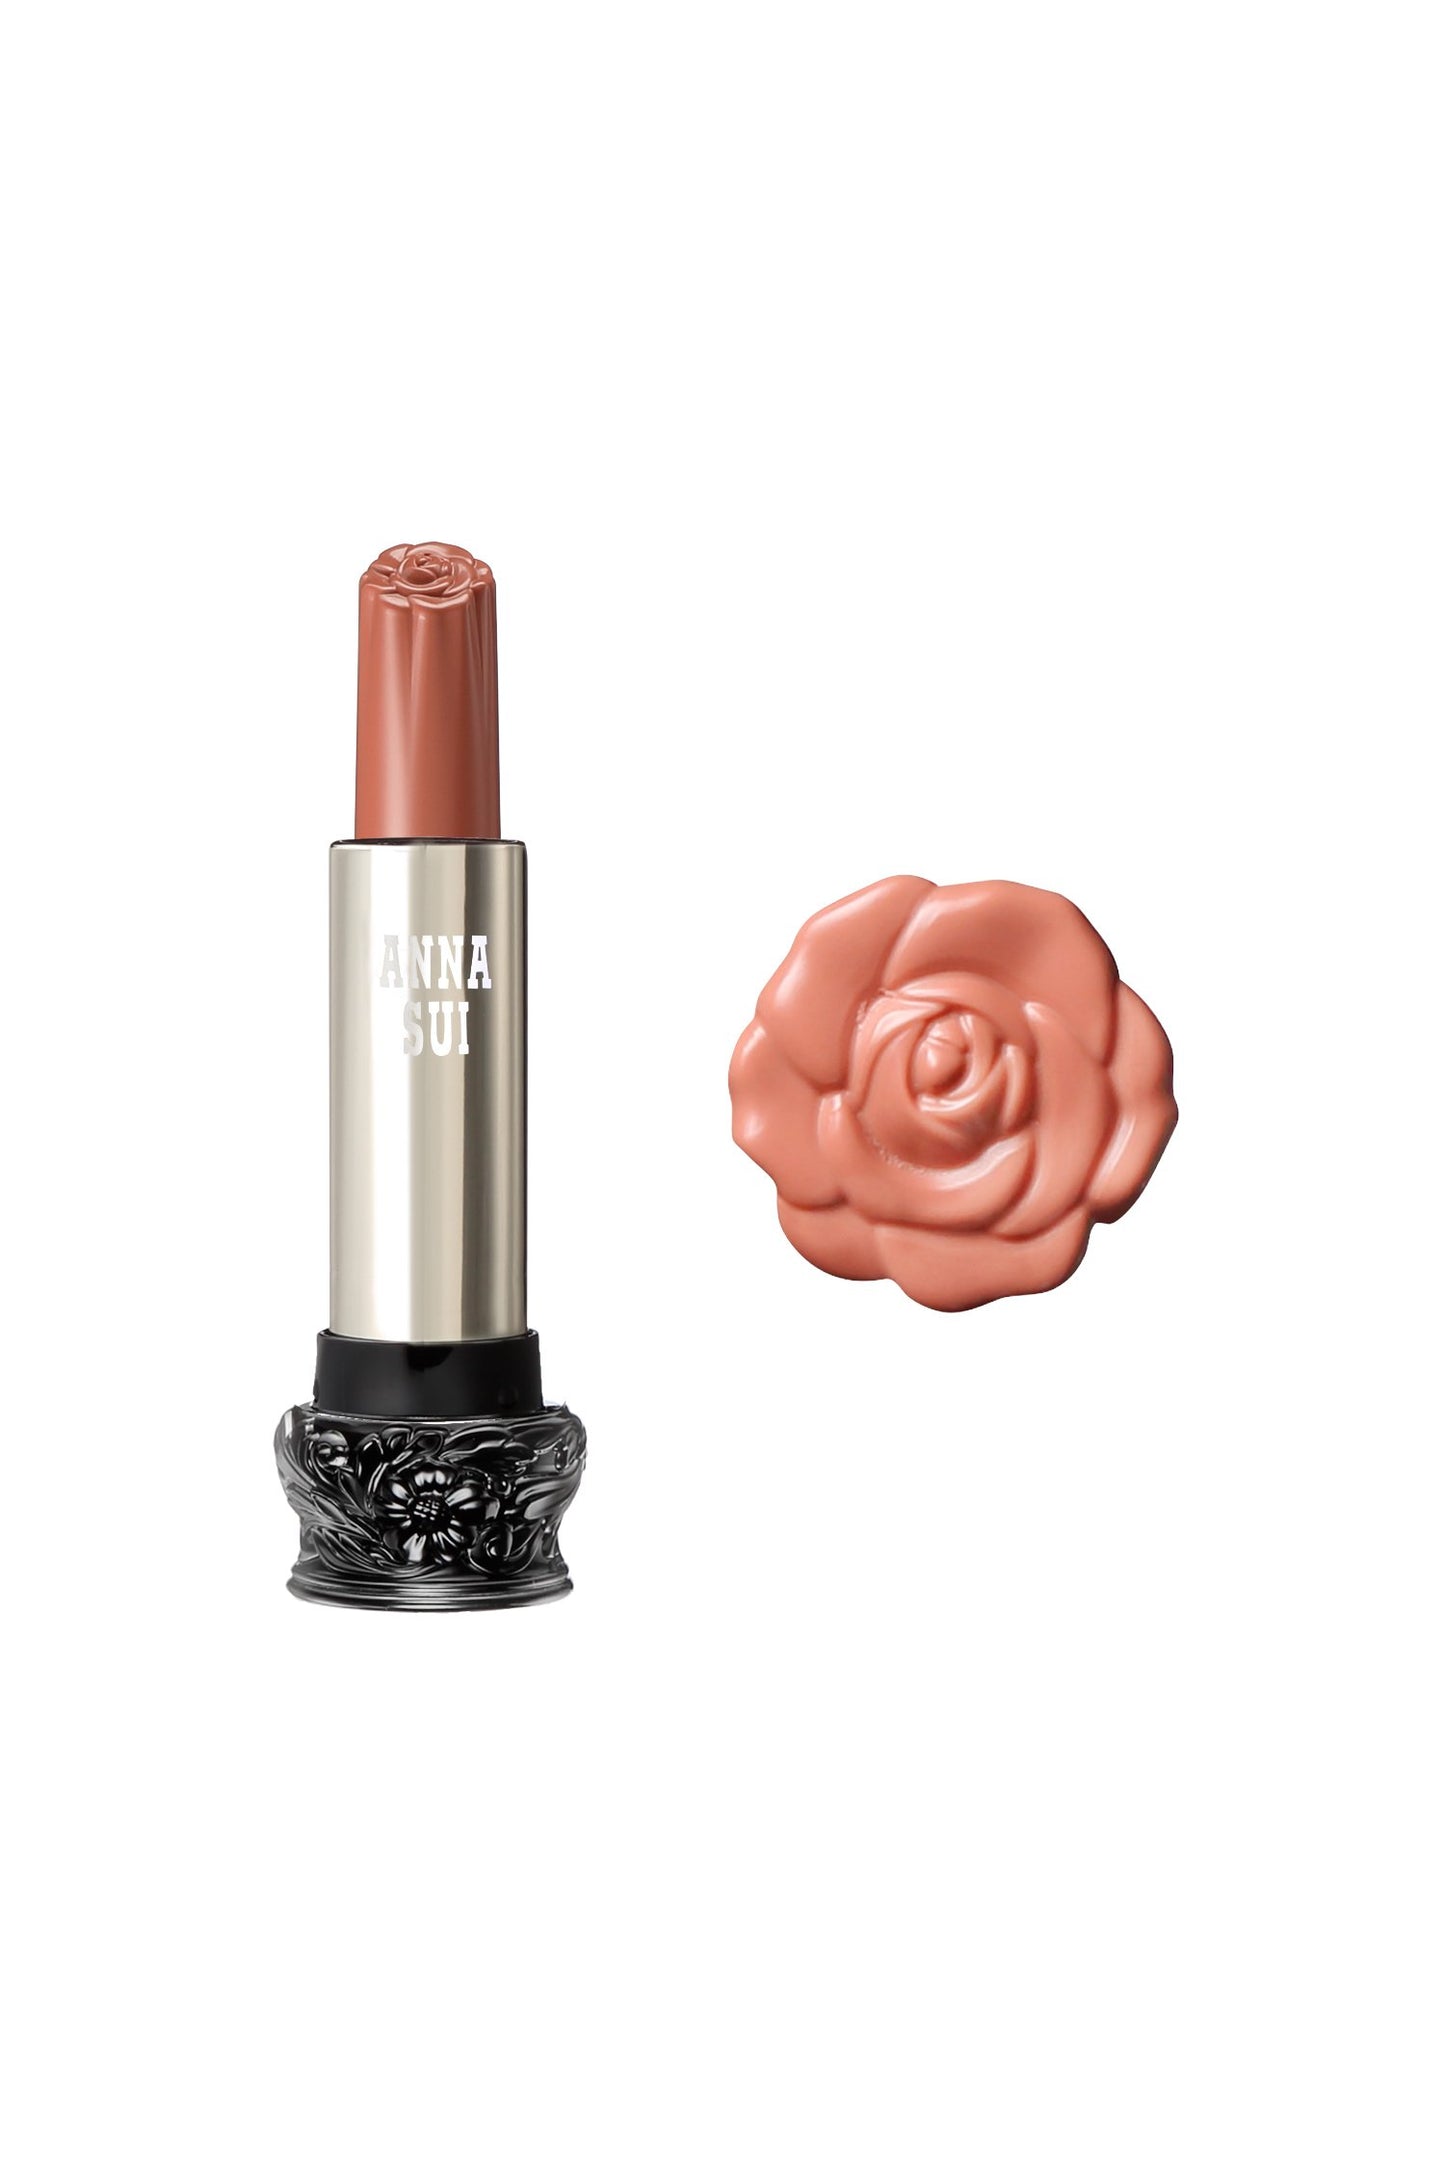 500-Apricot Iris Lipstick S: Sheer Flower, cylindrical, large black base, engraved floral design, metallic body 